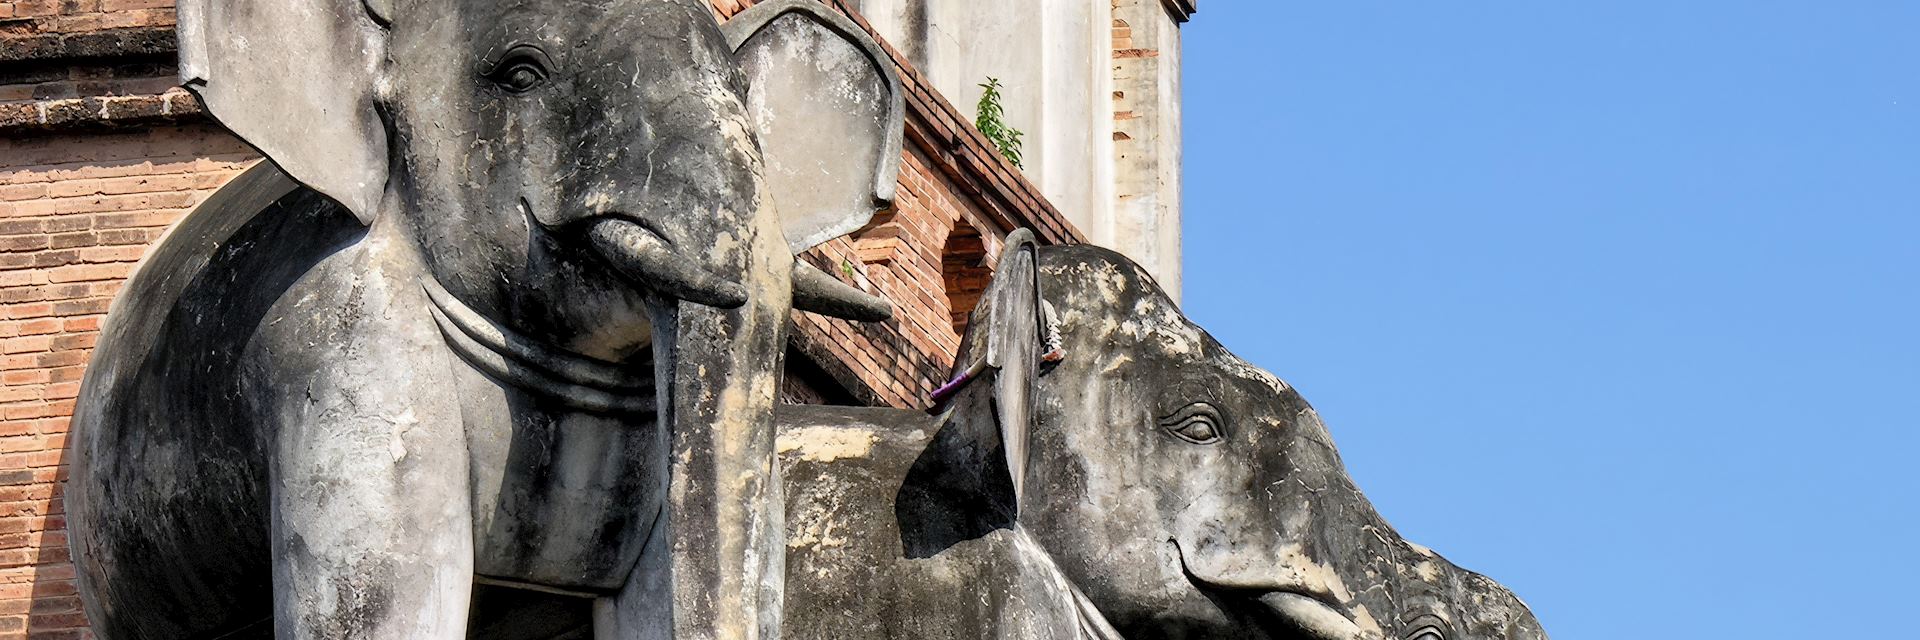 Elephants adorning Wat Chedi Luang